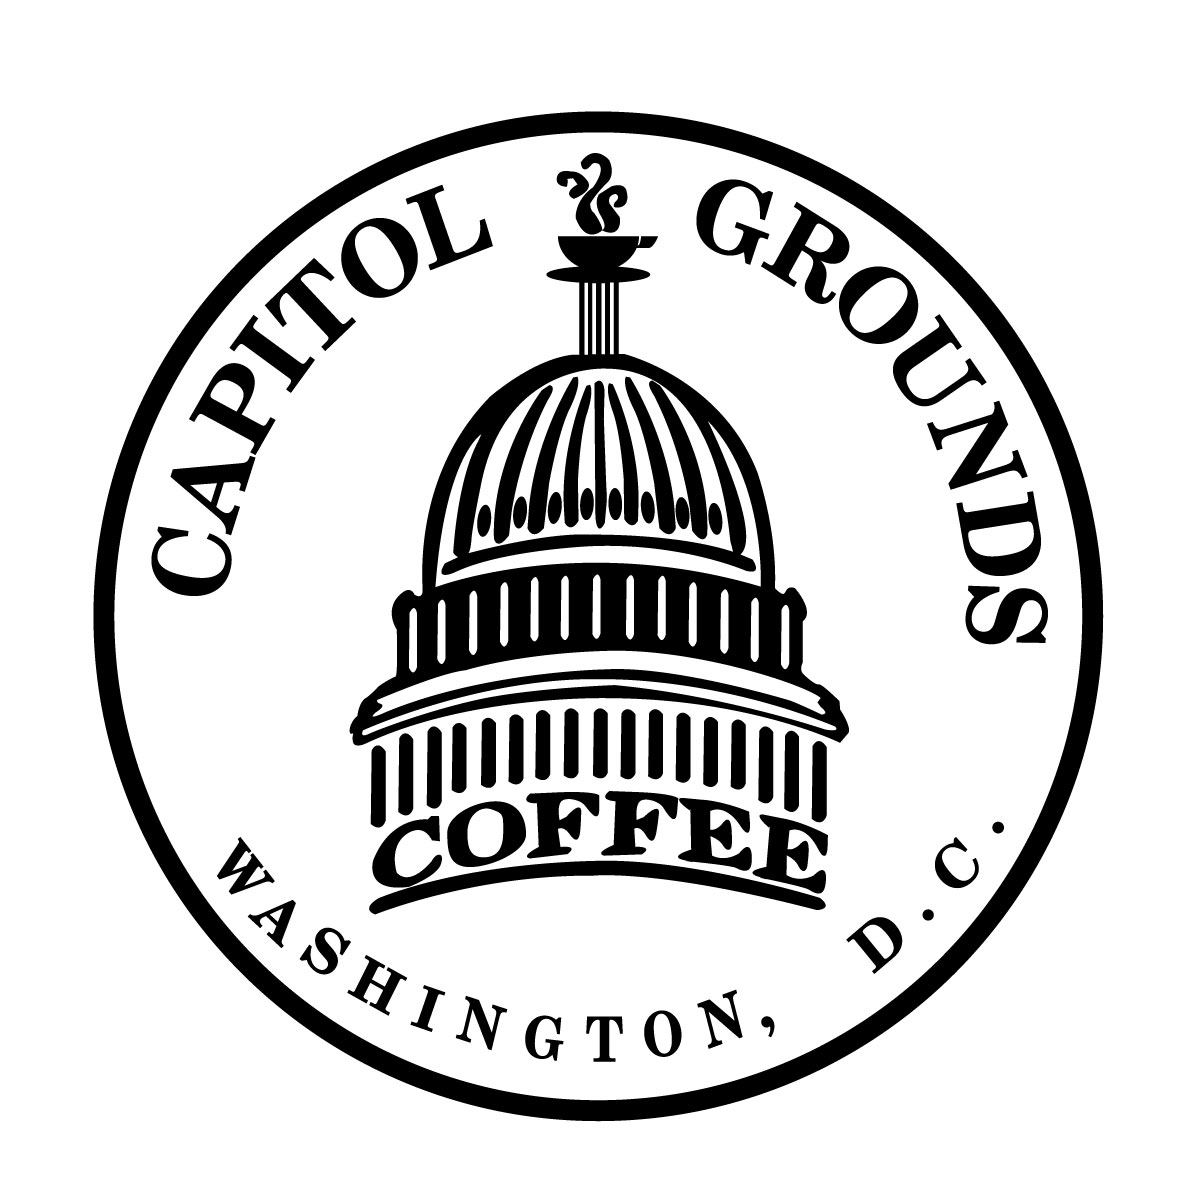 Capitol Grounds Coffee.jpg